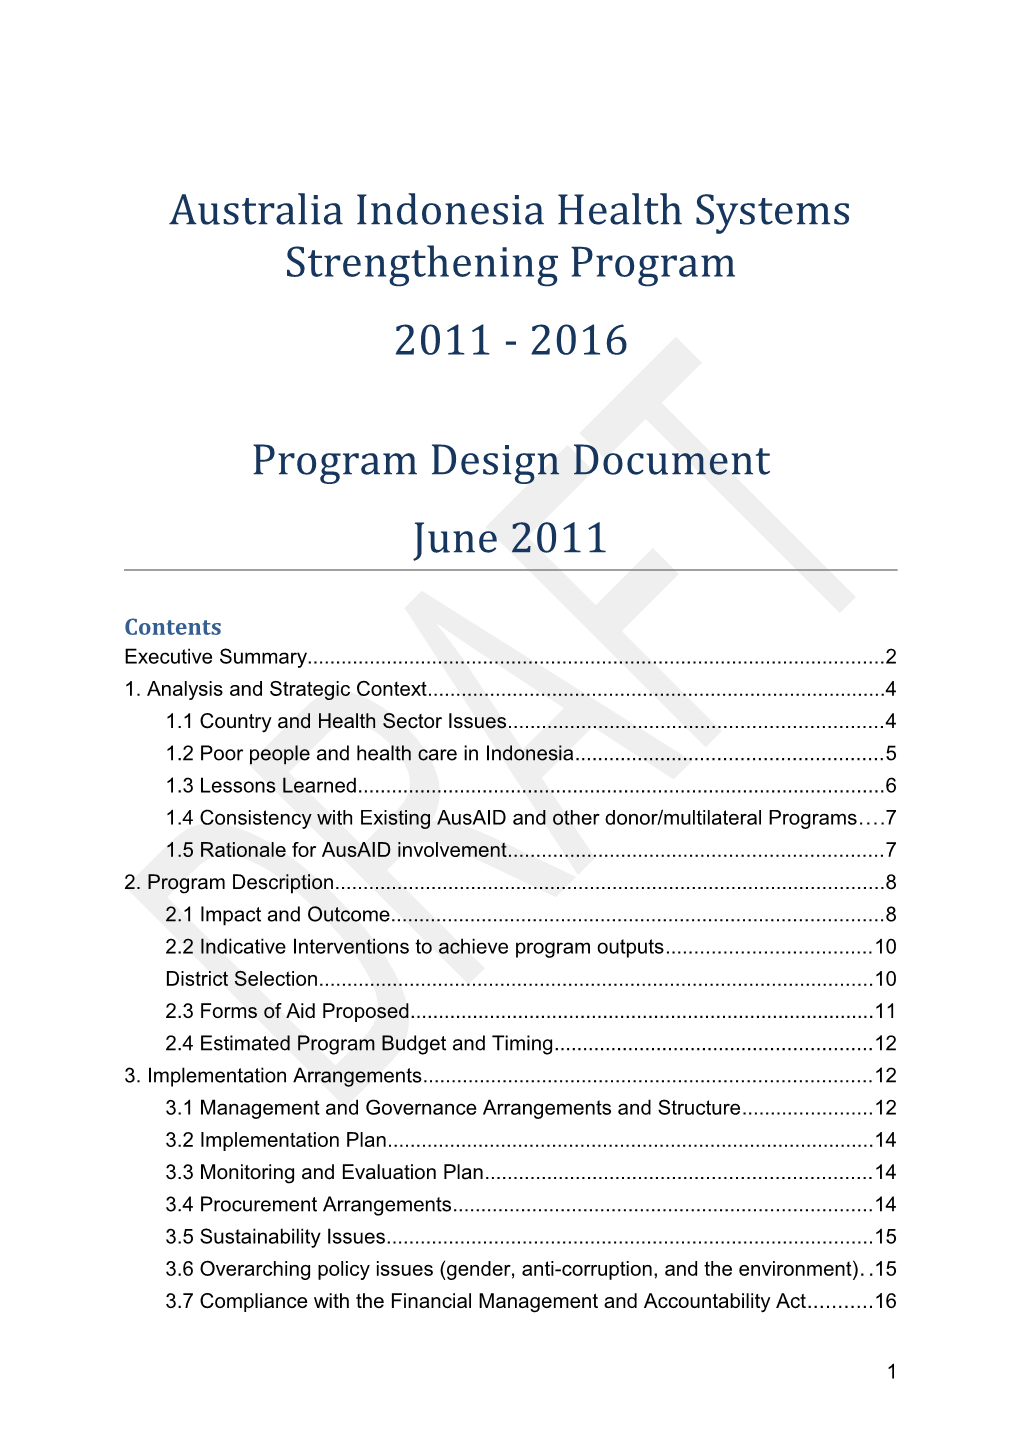 Australia Indonesia Health Systems Strengthening Program